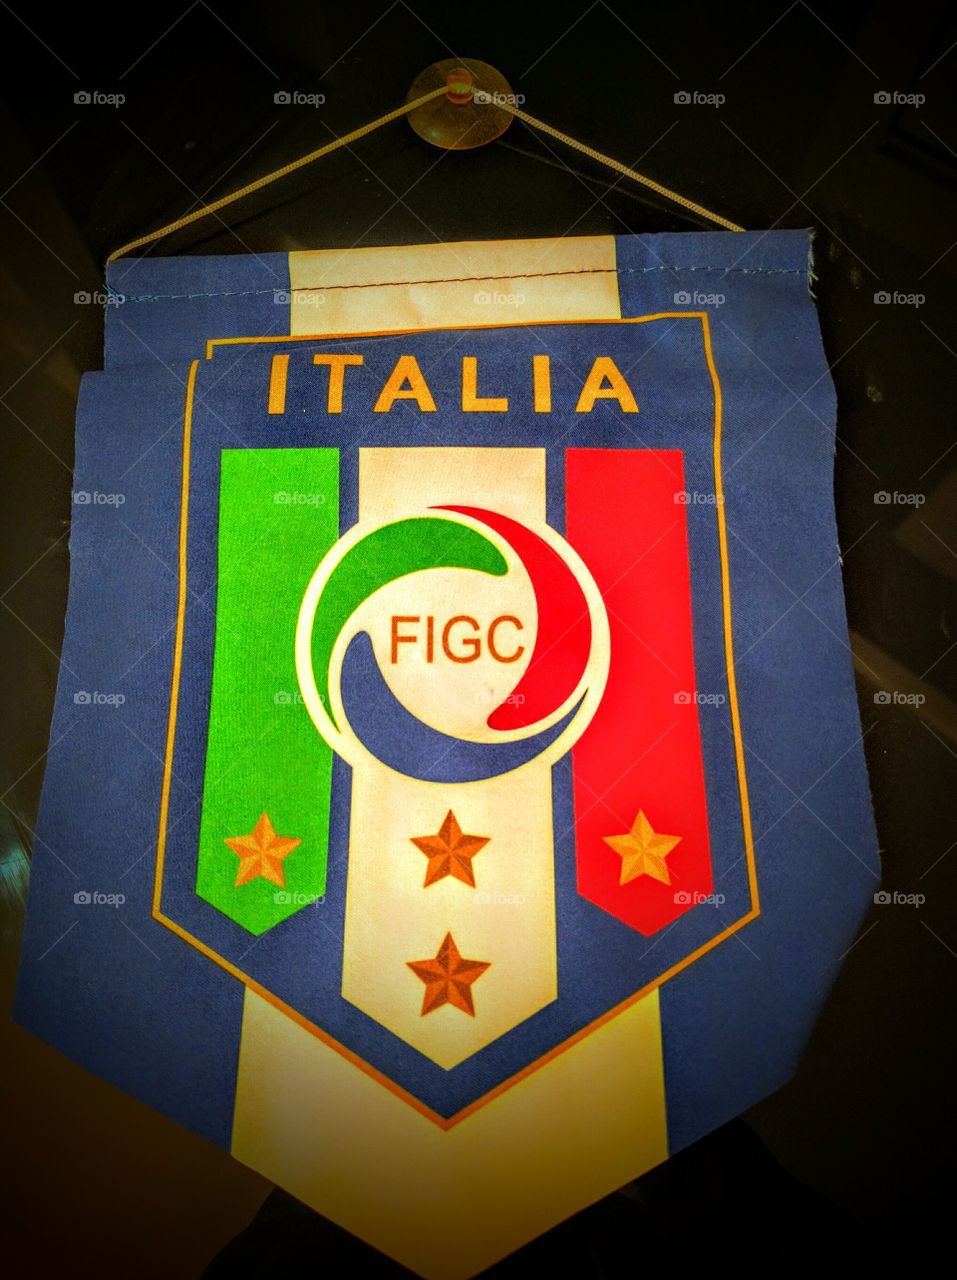 Italia FIGC FIFA